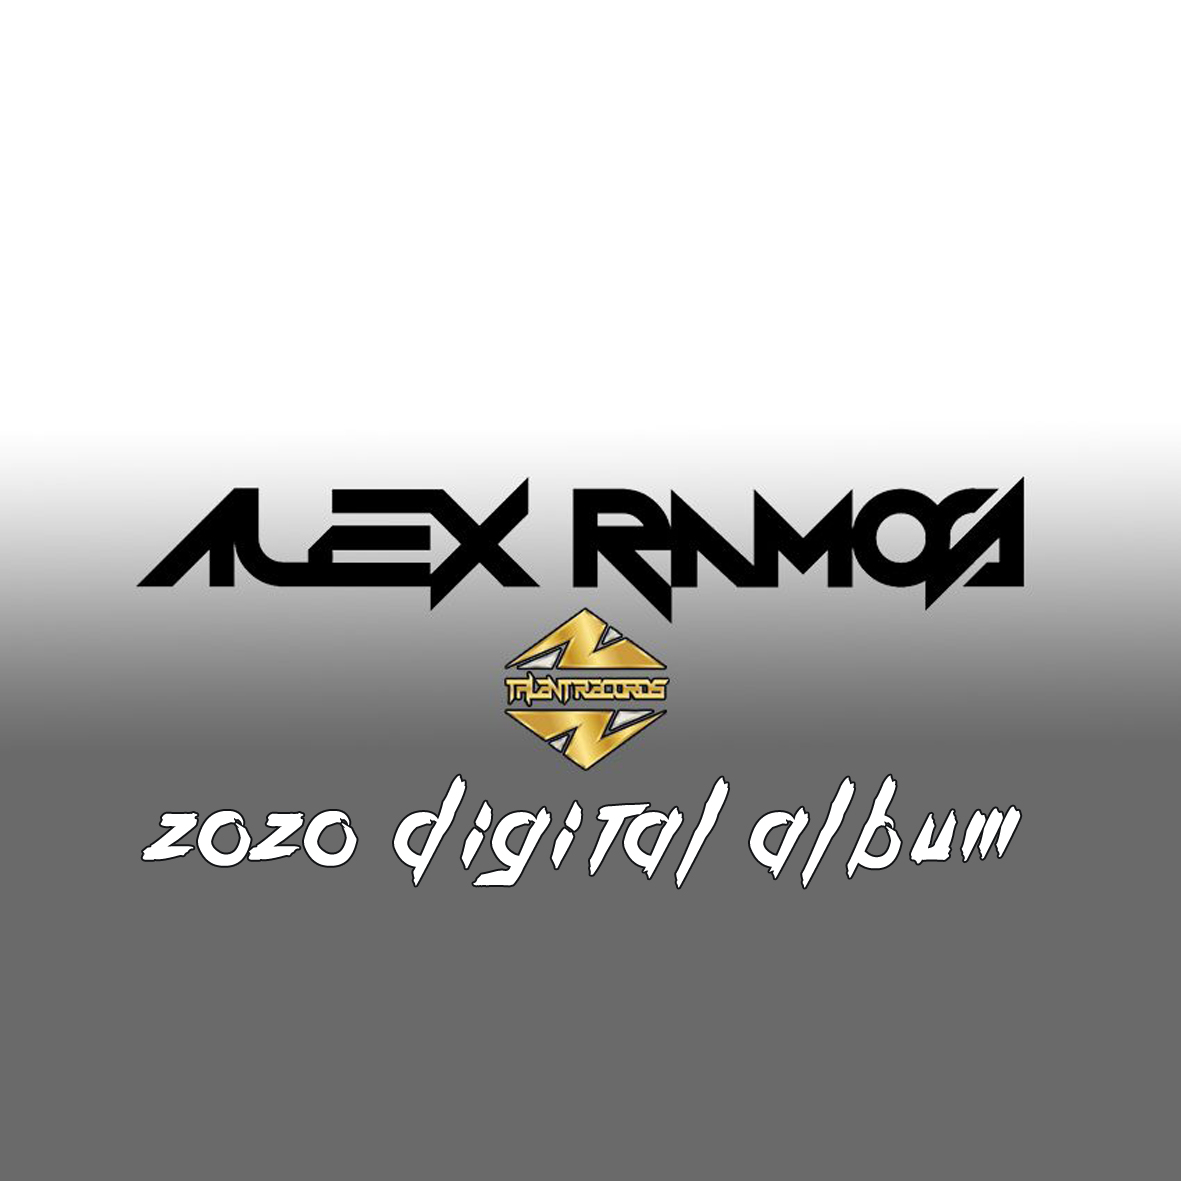 ALEX RAMOS 2020 Digital Album cover.jpg